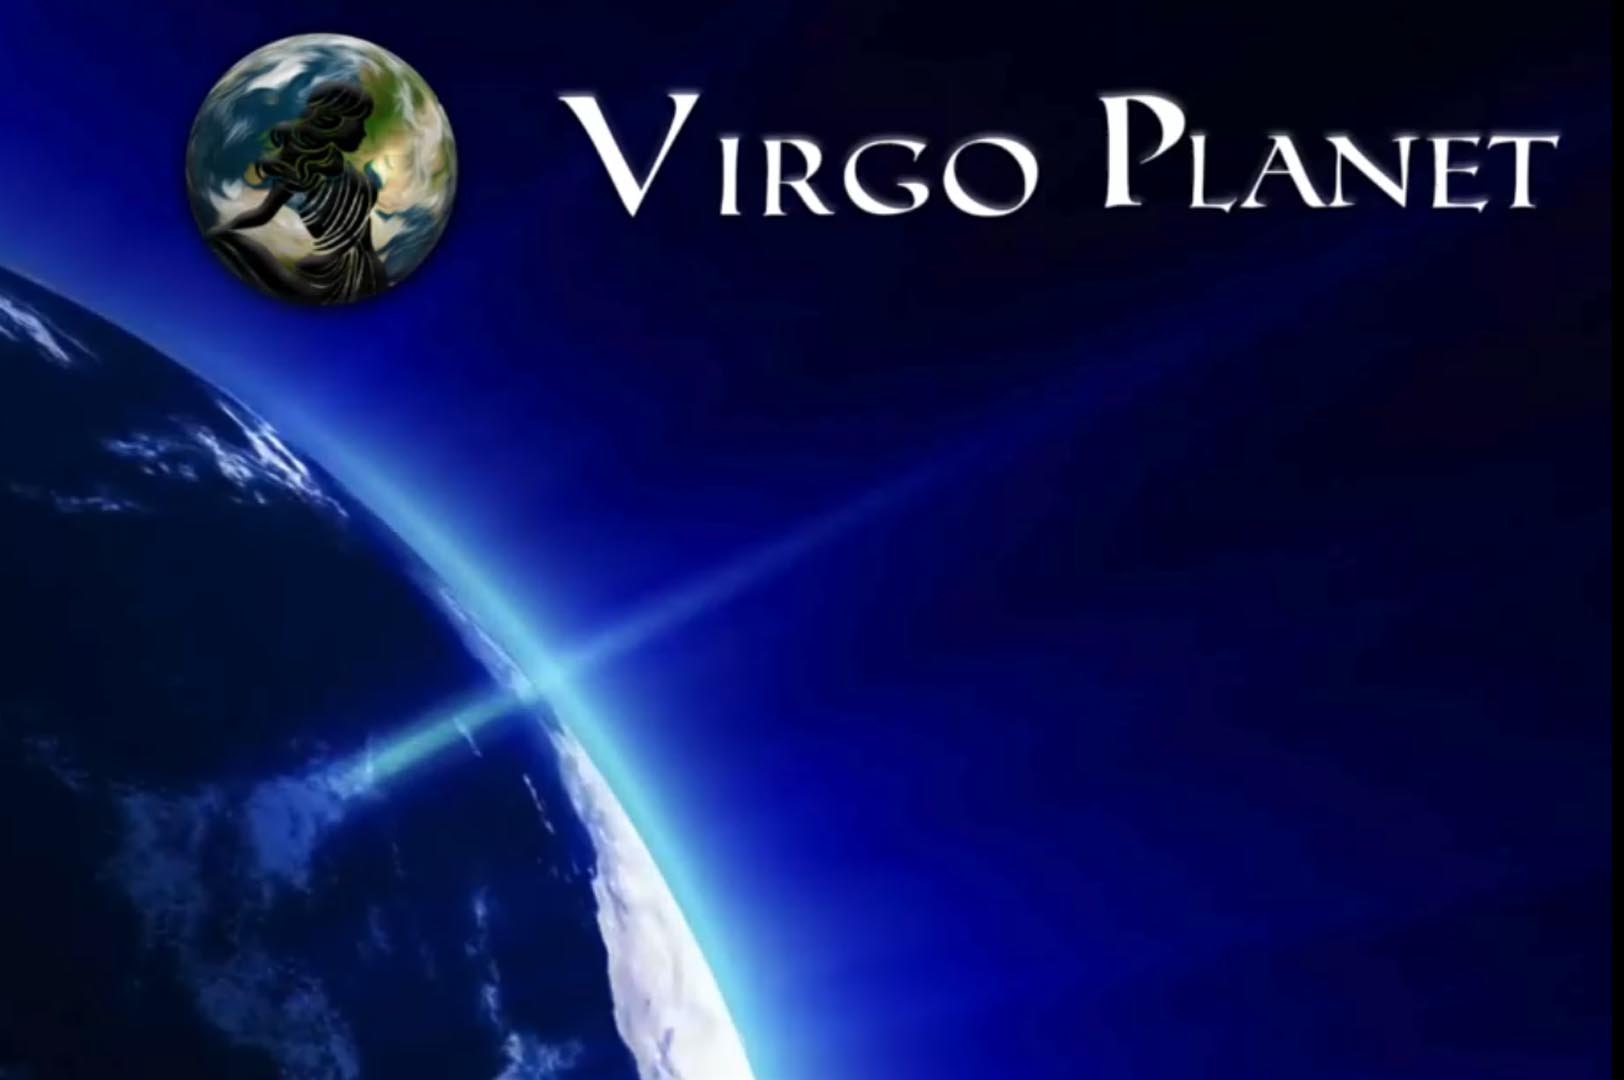 Virgo Planet